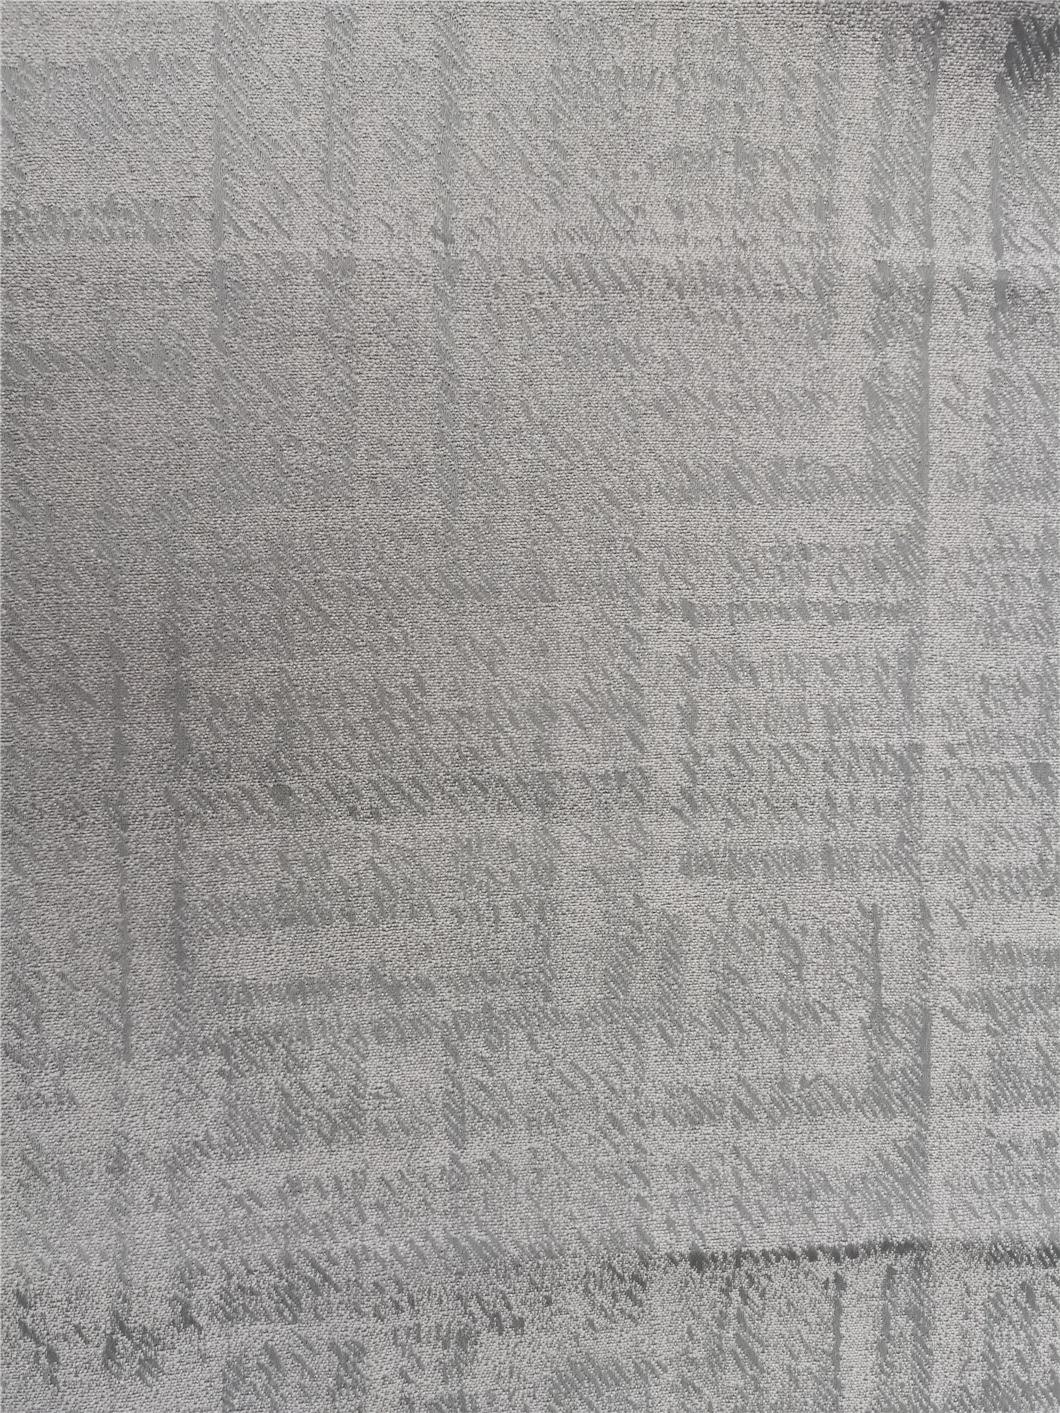 Home Textile Blinds Jacquard Window Curtain Fabric